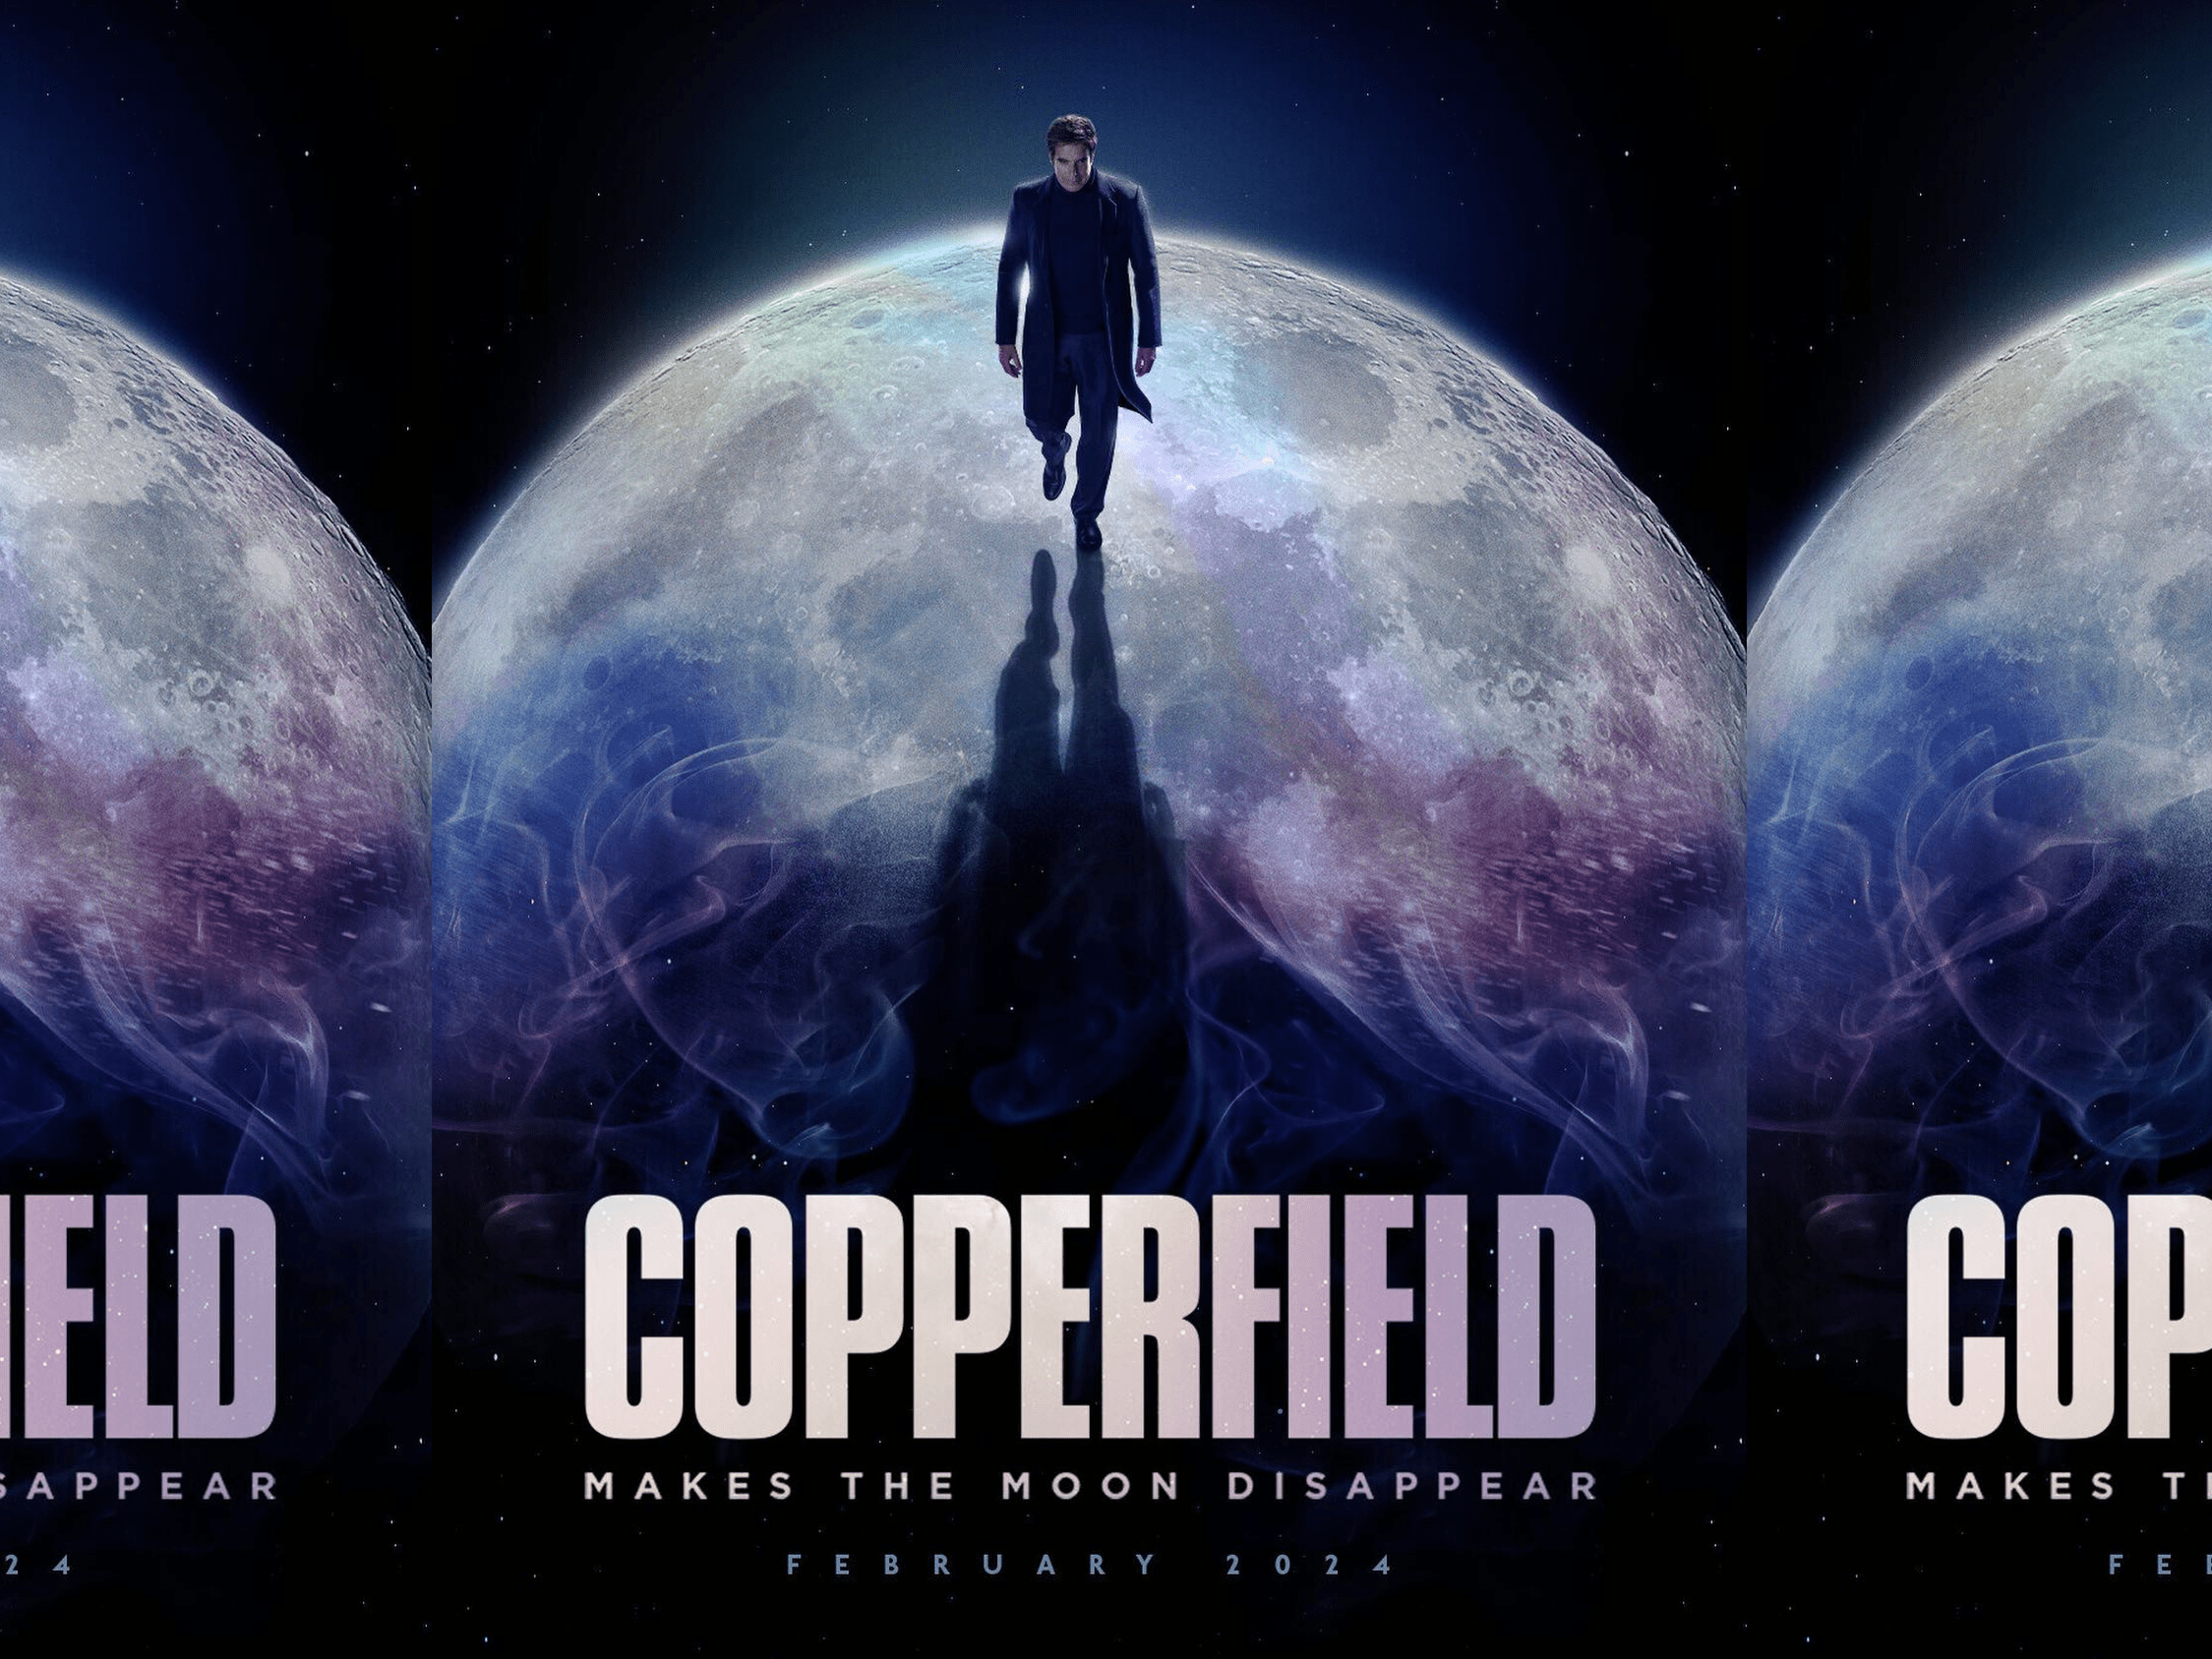 It's True! David Copperfield Will Vanish The Moon: But When?